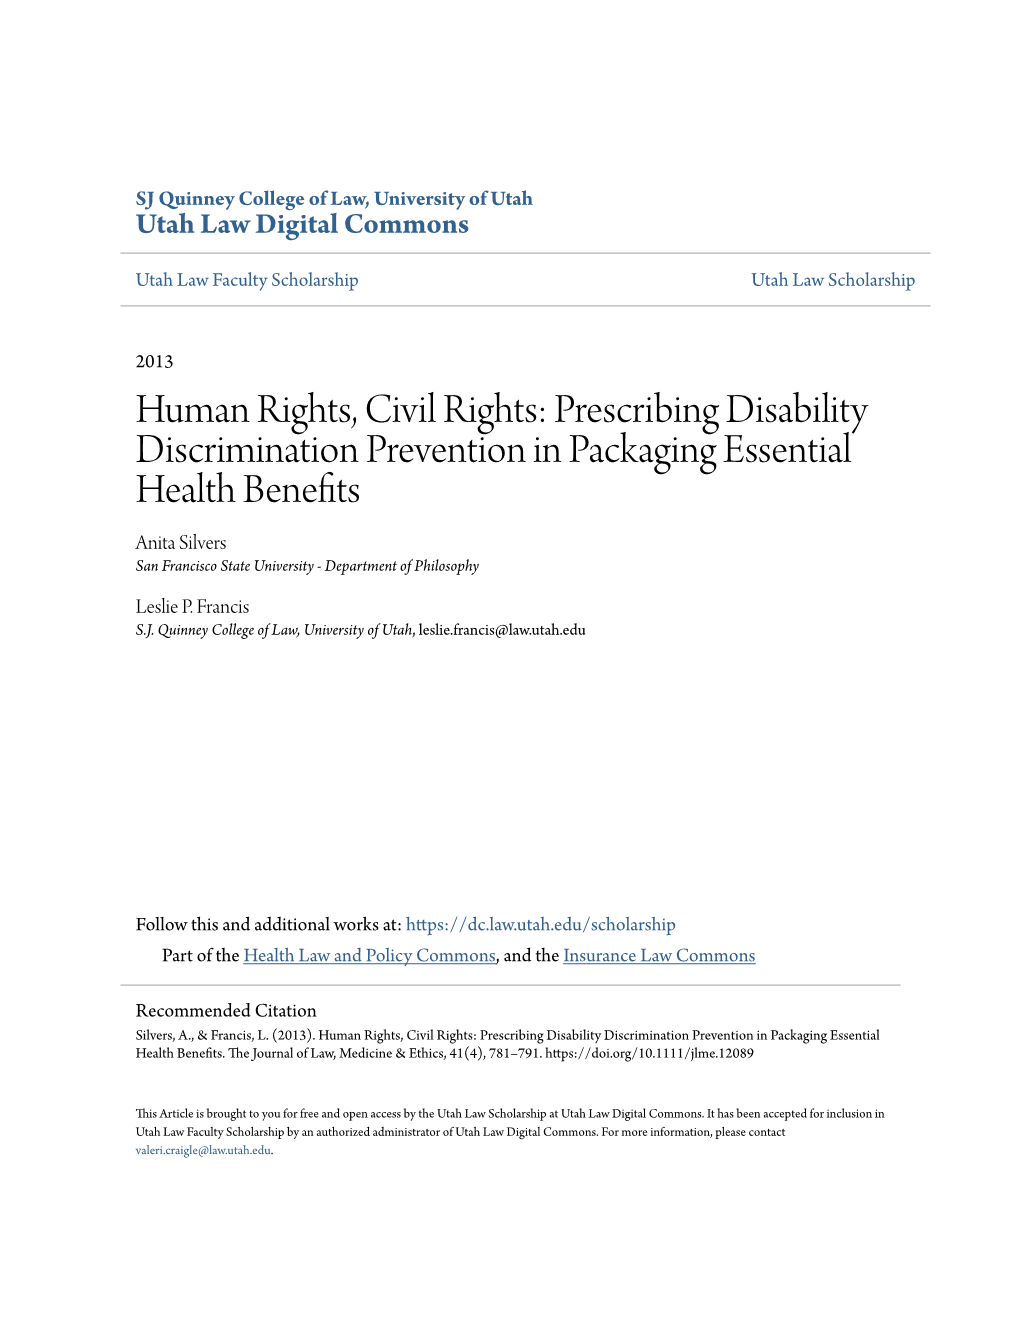 Human Rights, Civil Rights: Prescribing Disability